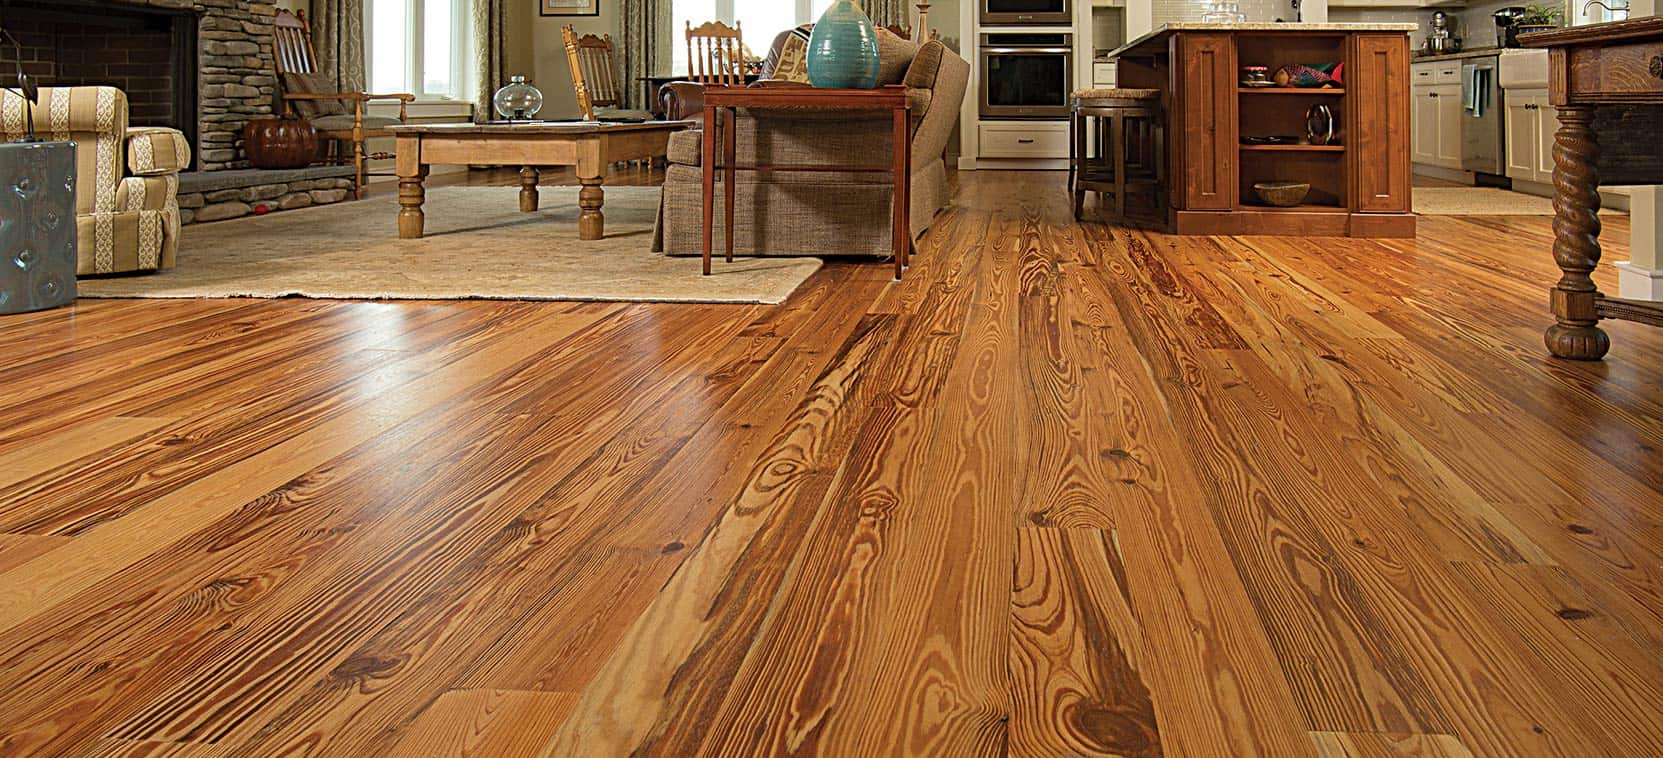 Classic Painting Hardwood Floors Prefinished Hardwood Floor Installation and Interior